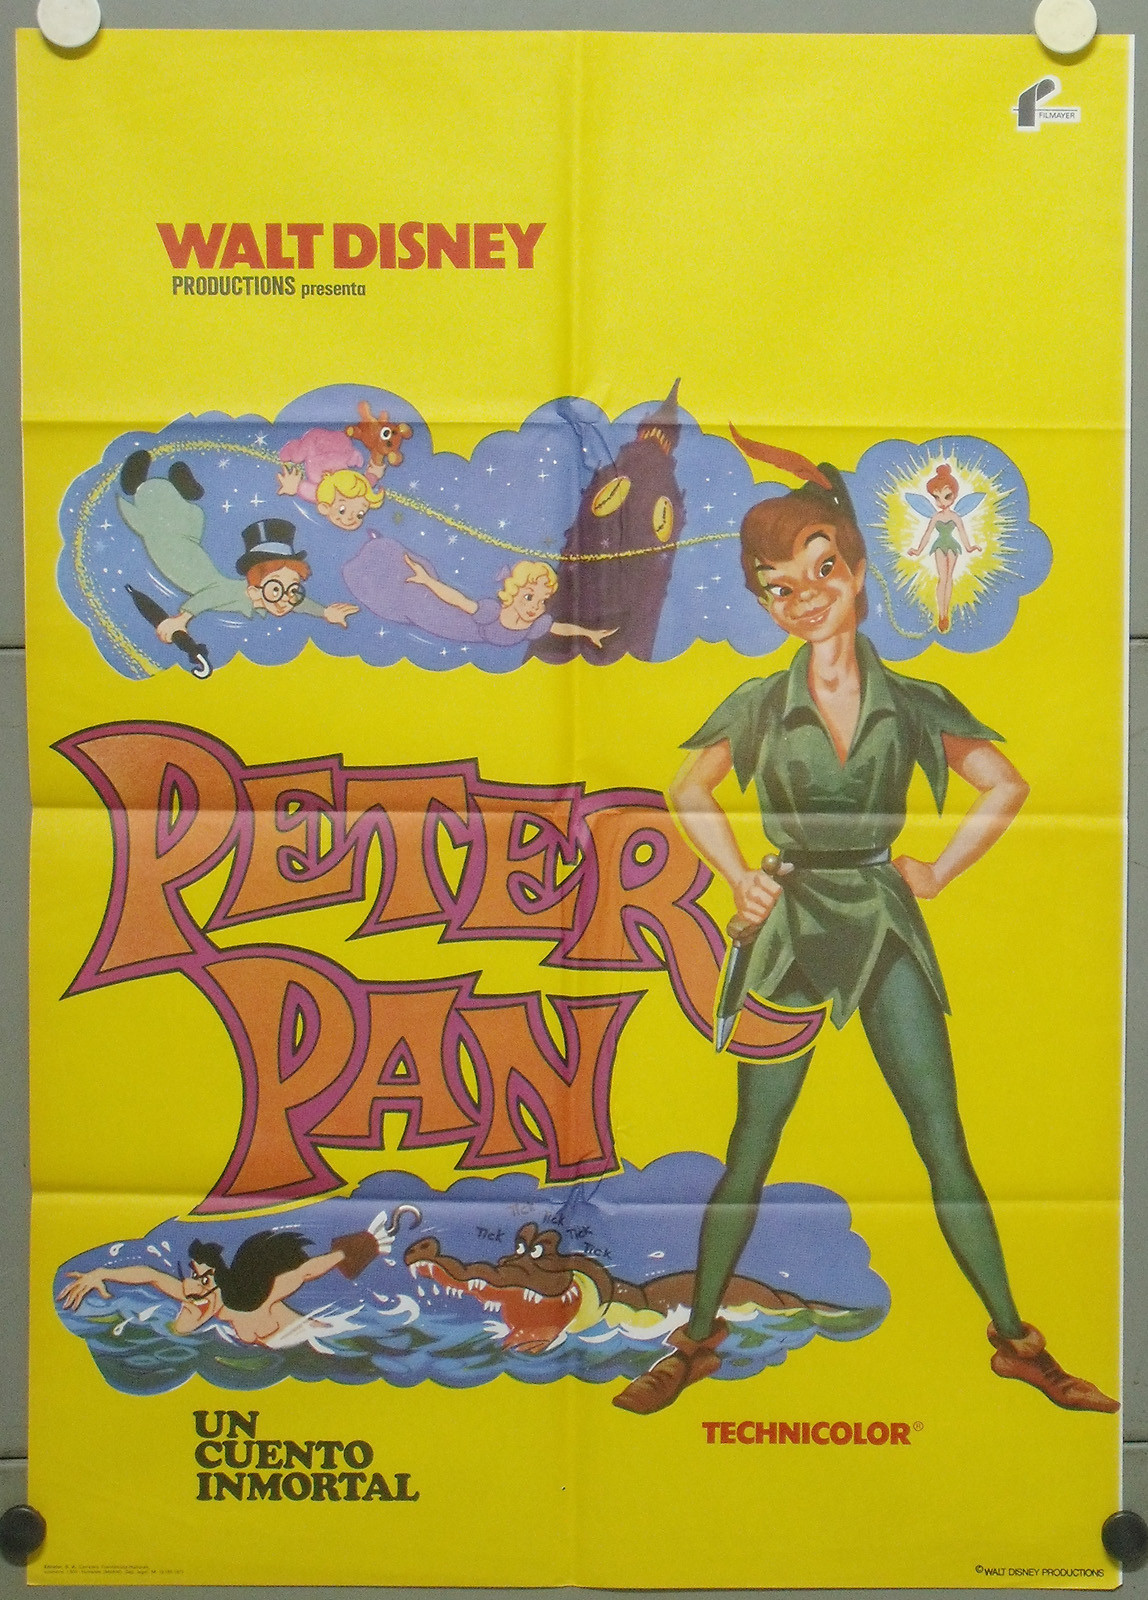 Peter Pan (1953 film) - Wikipedia